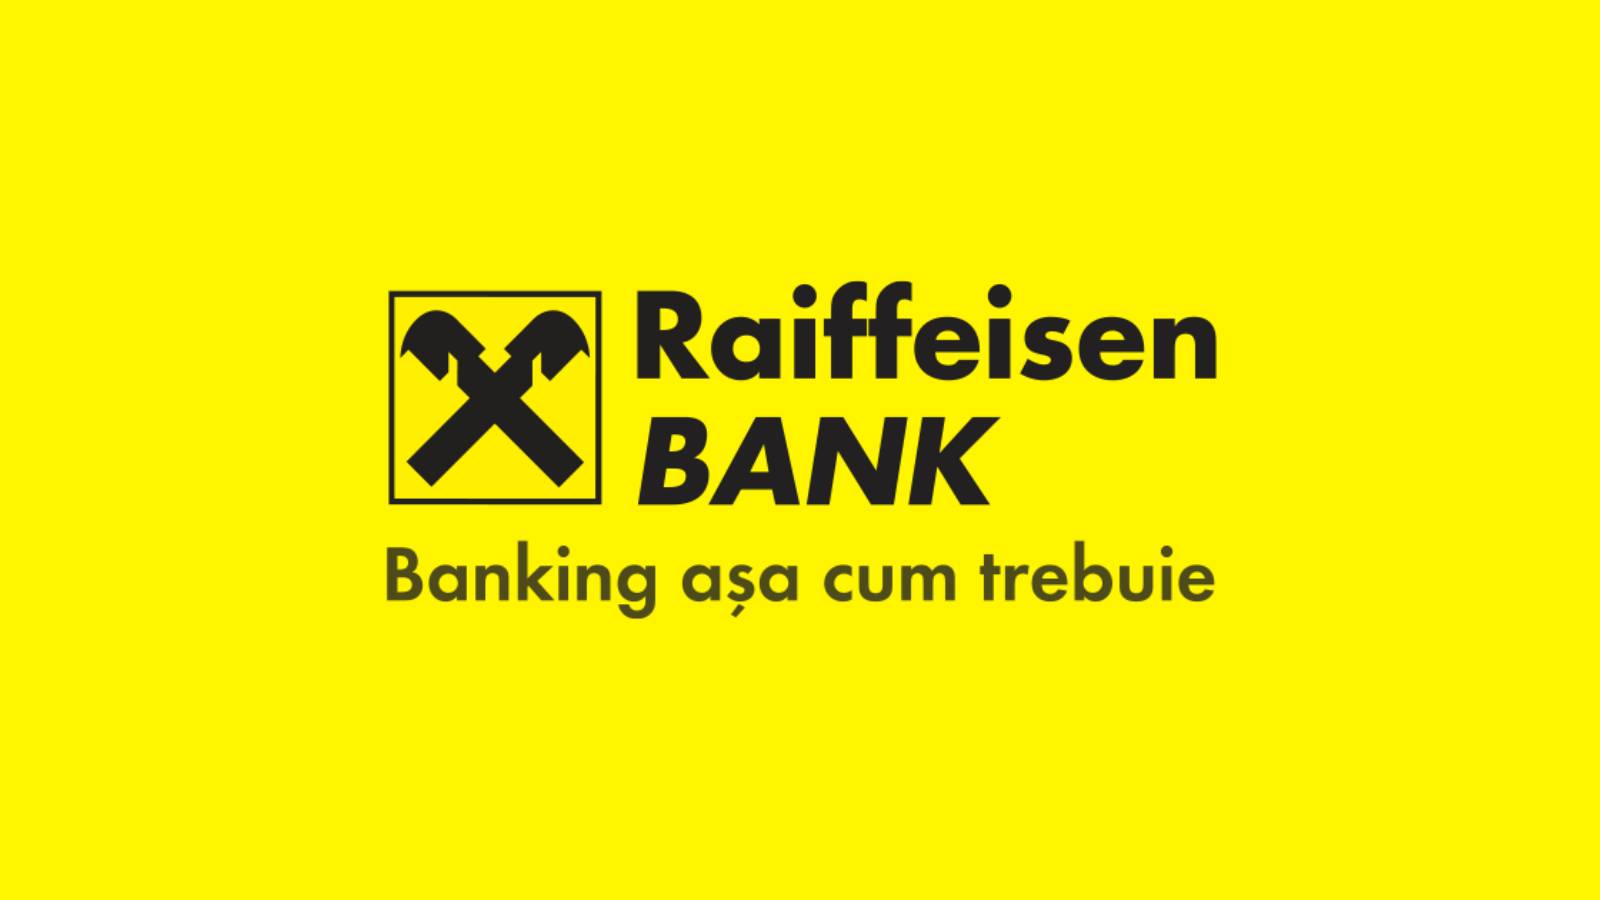 Raiffeisen Bank shopping